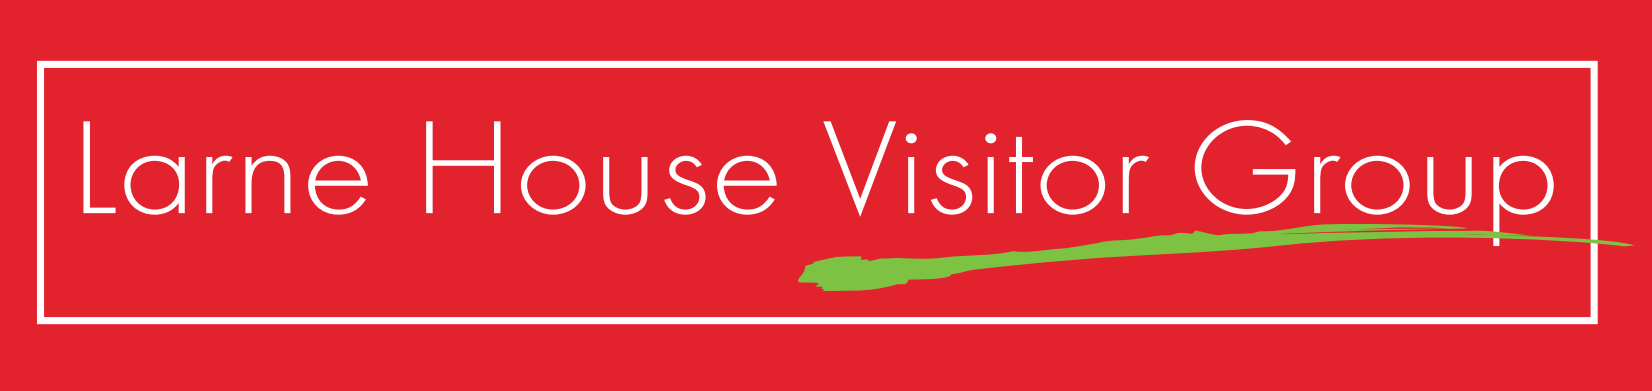 Larne House Visitors Group logo